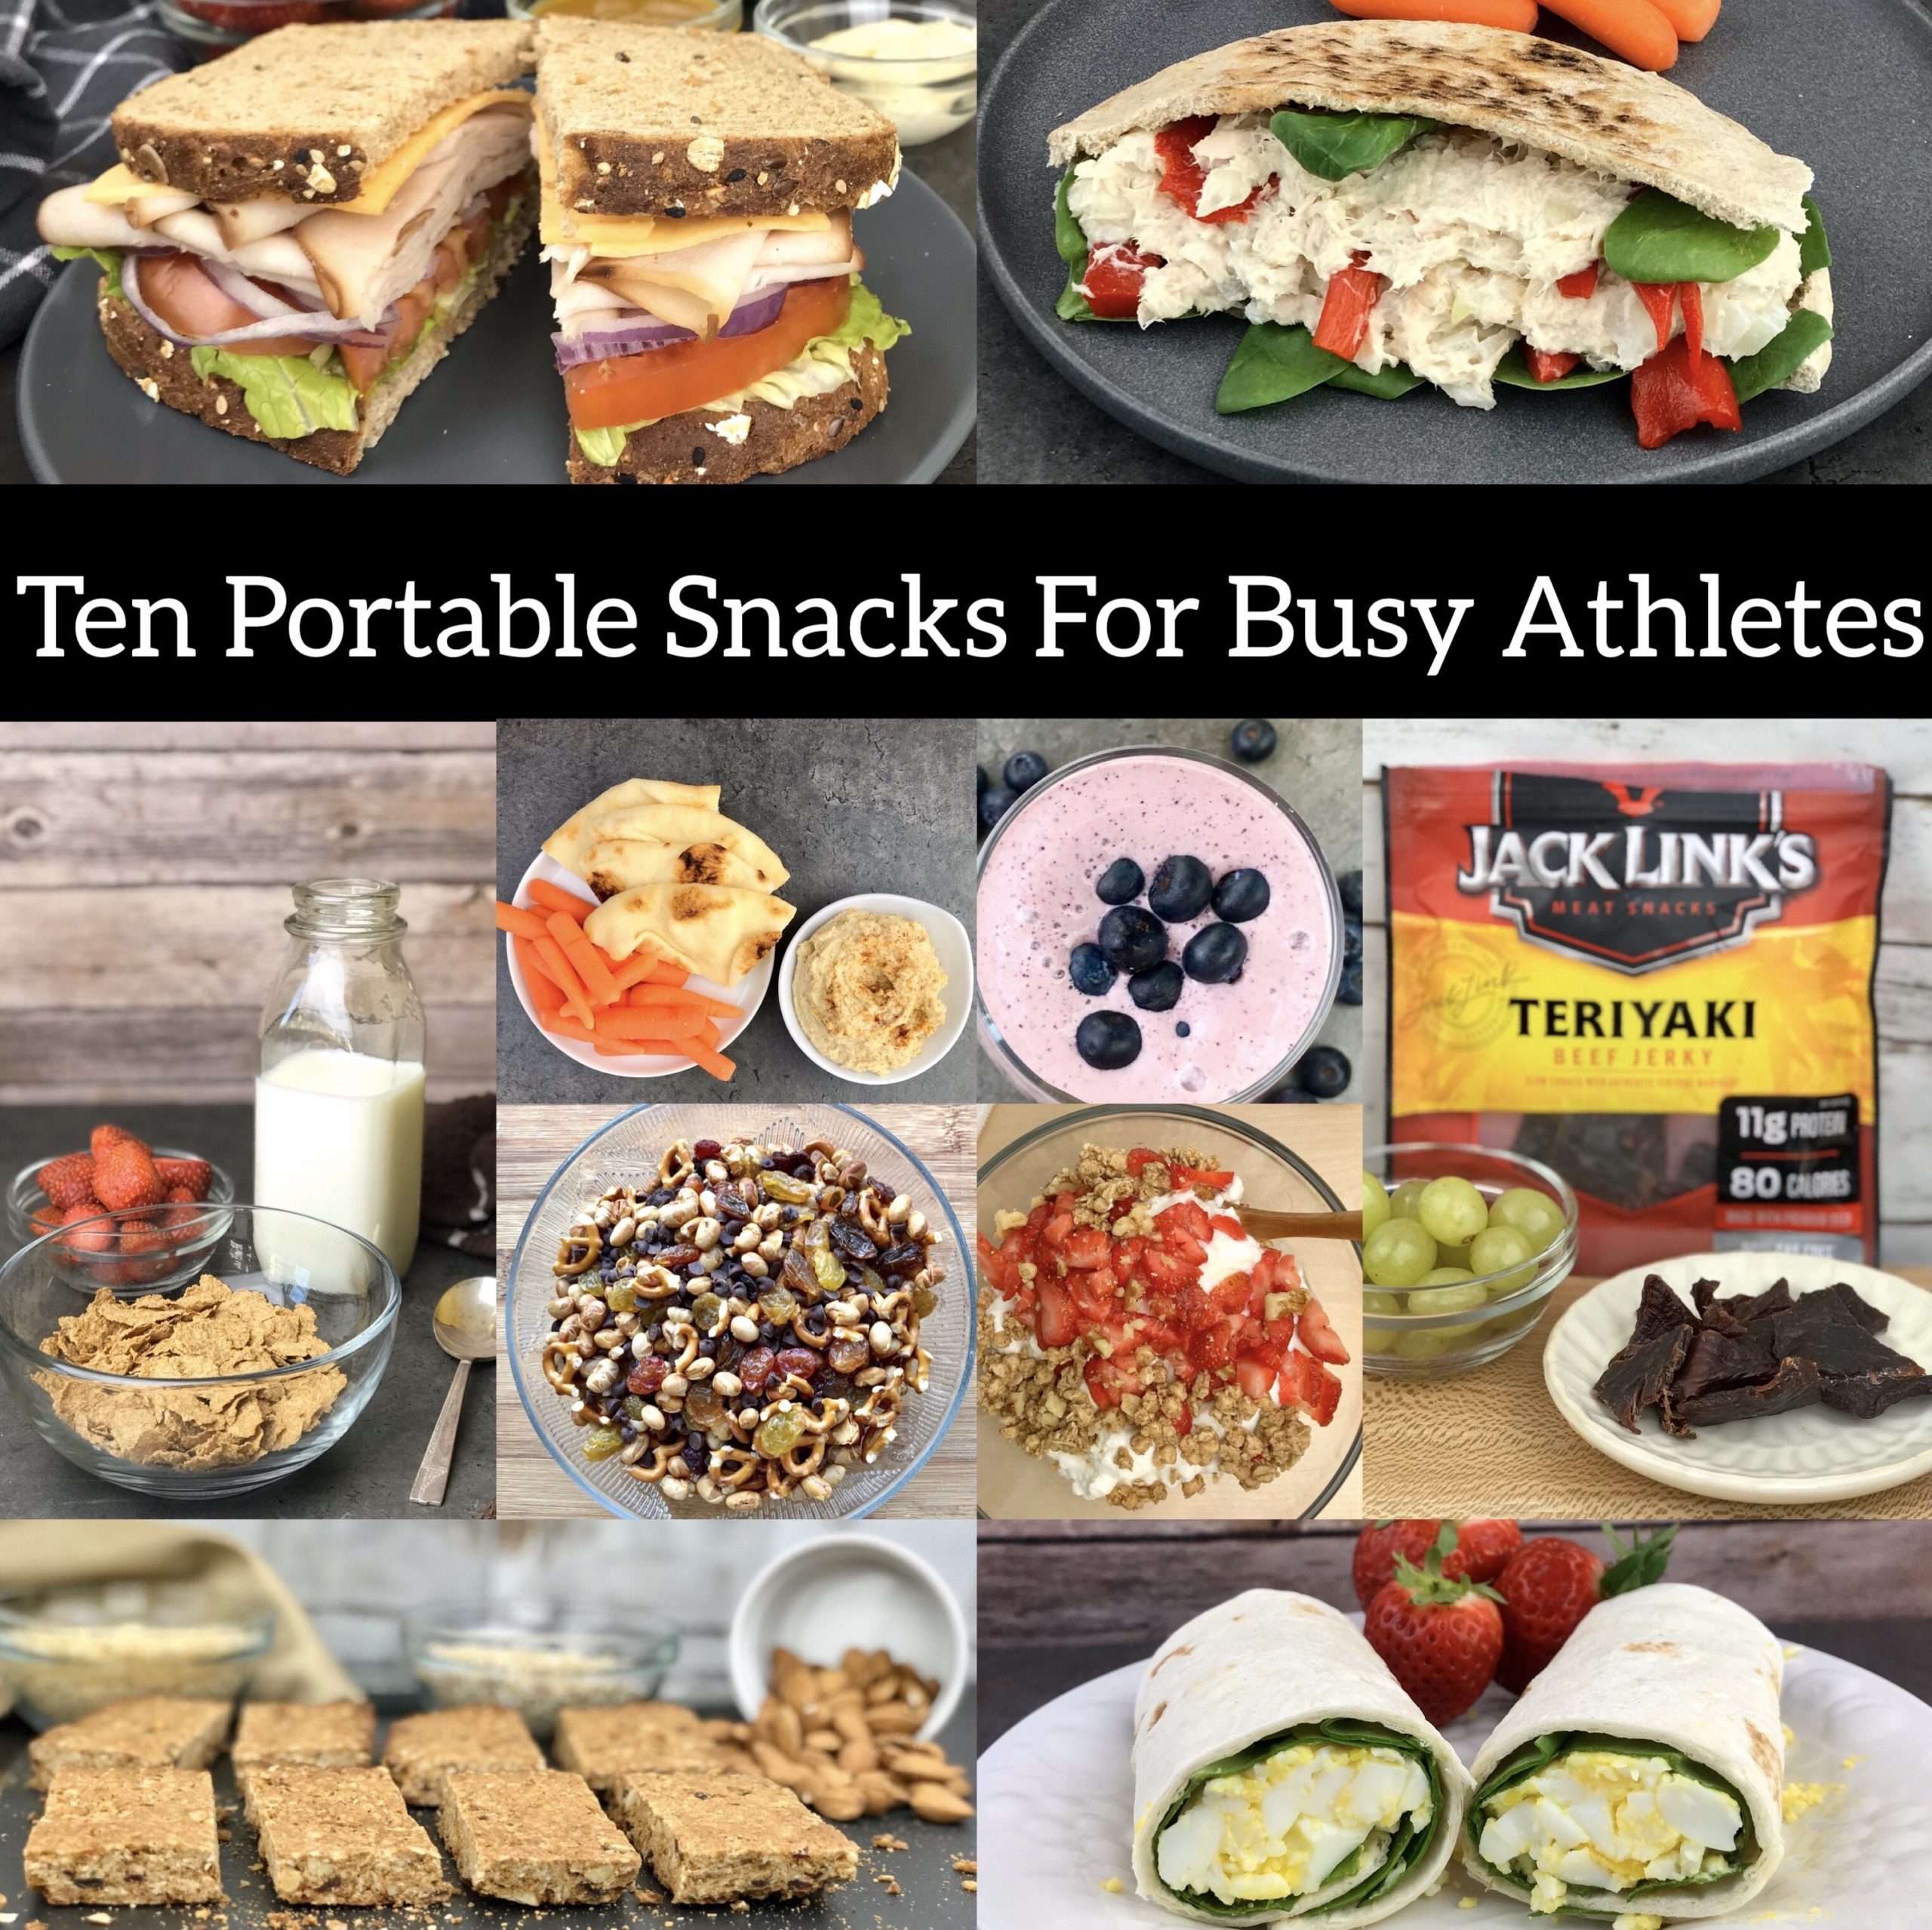 Vegan athlete snack ideas